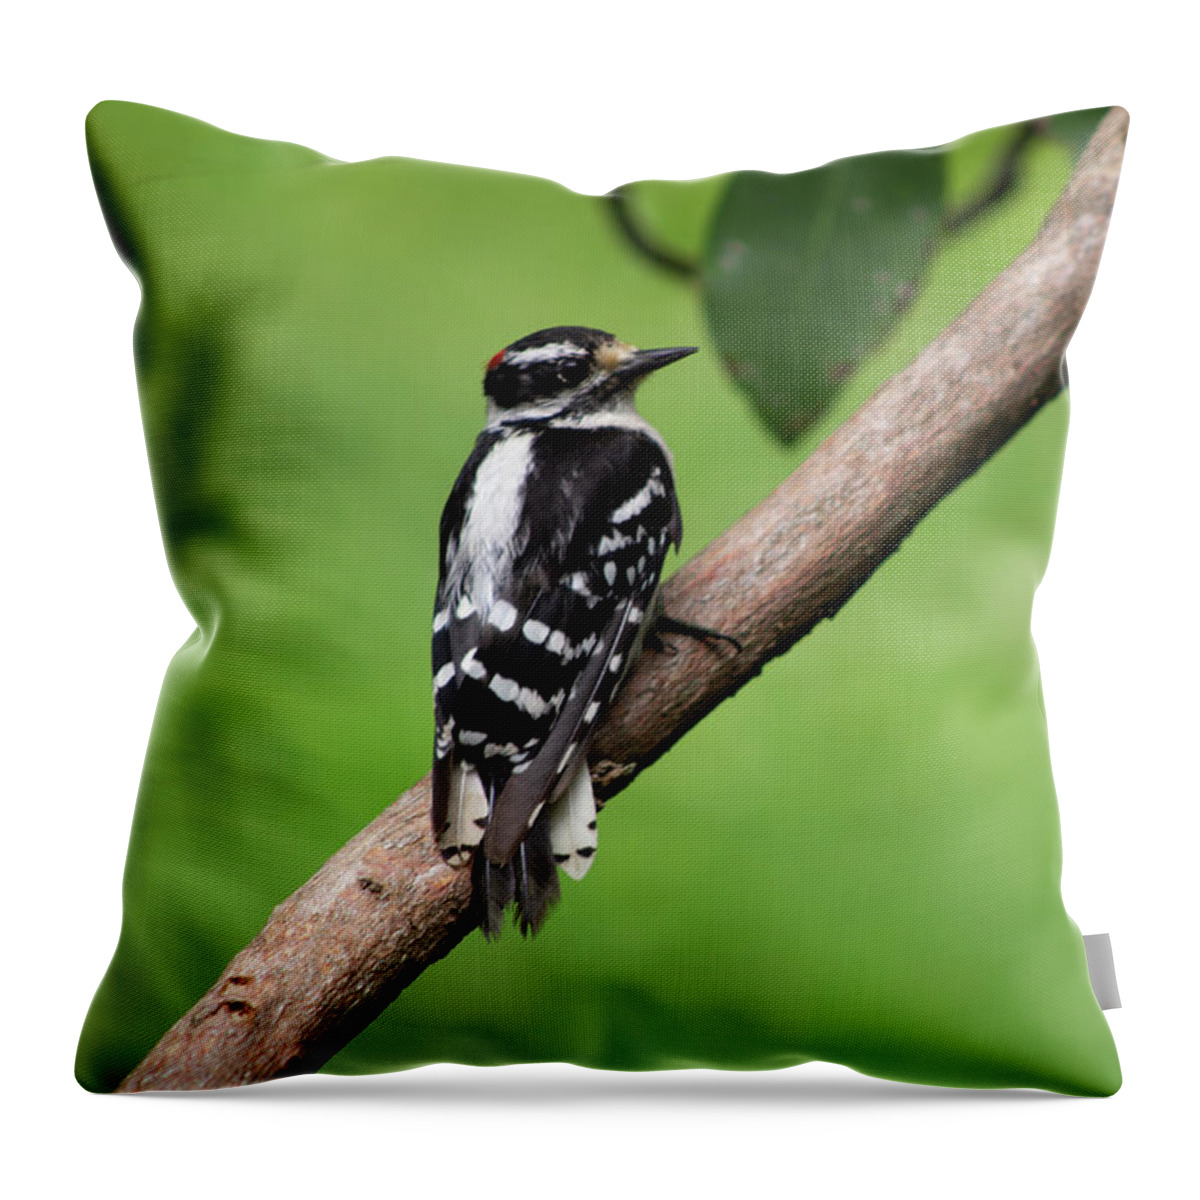 Bird Throw Pillow featuring the photograph Downy Woodpecker by Geoff Jewett